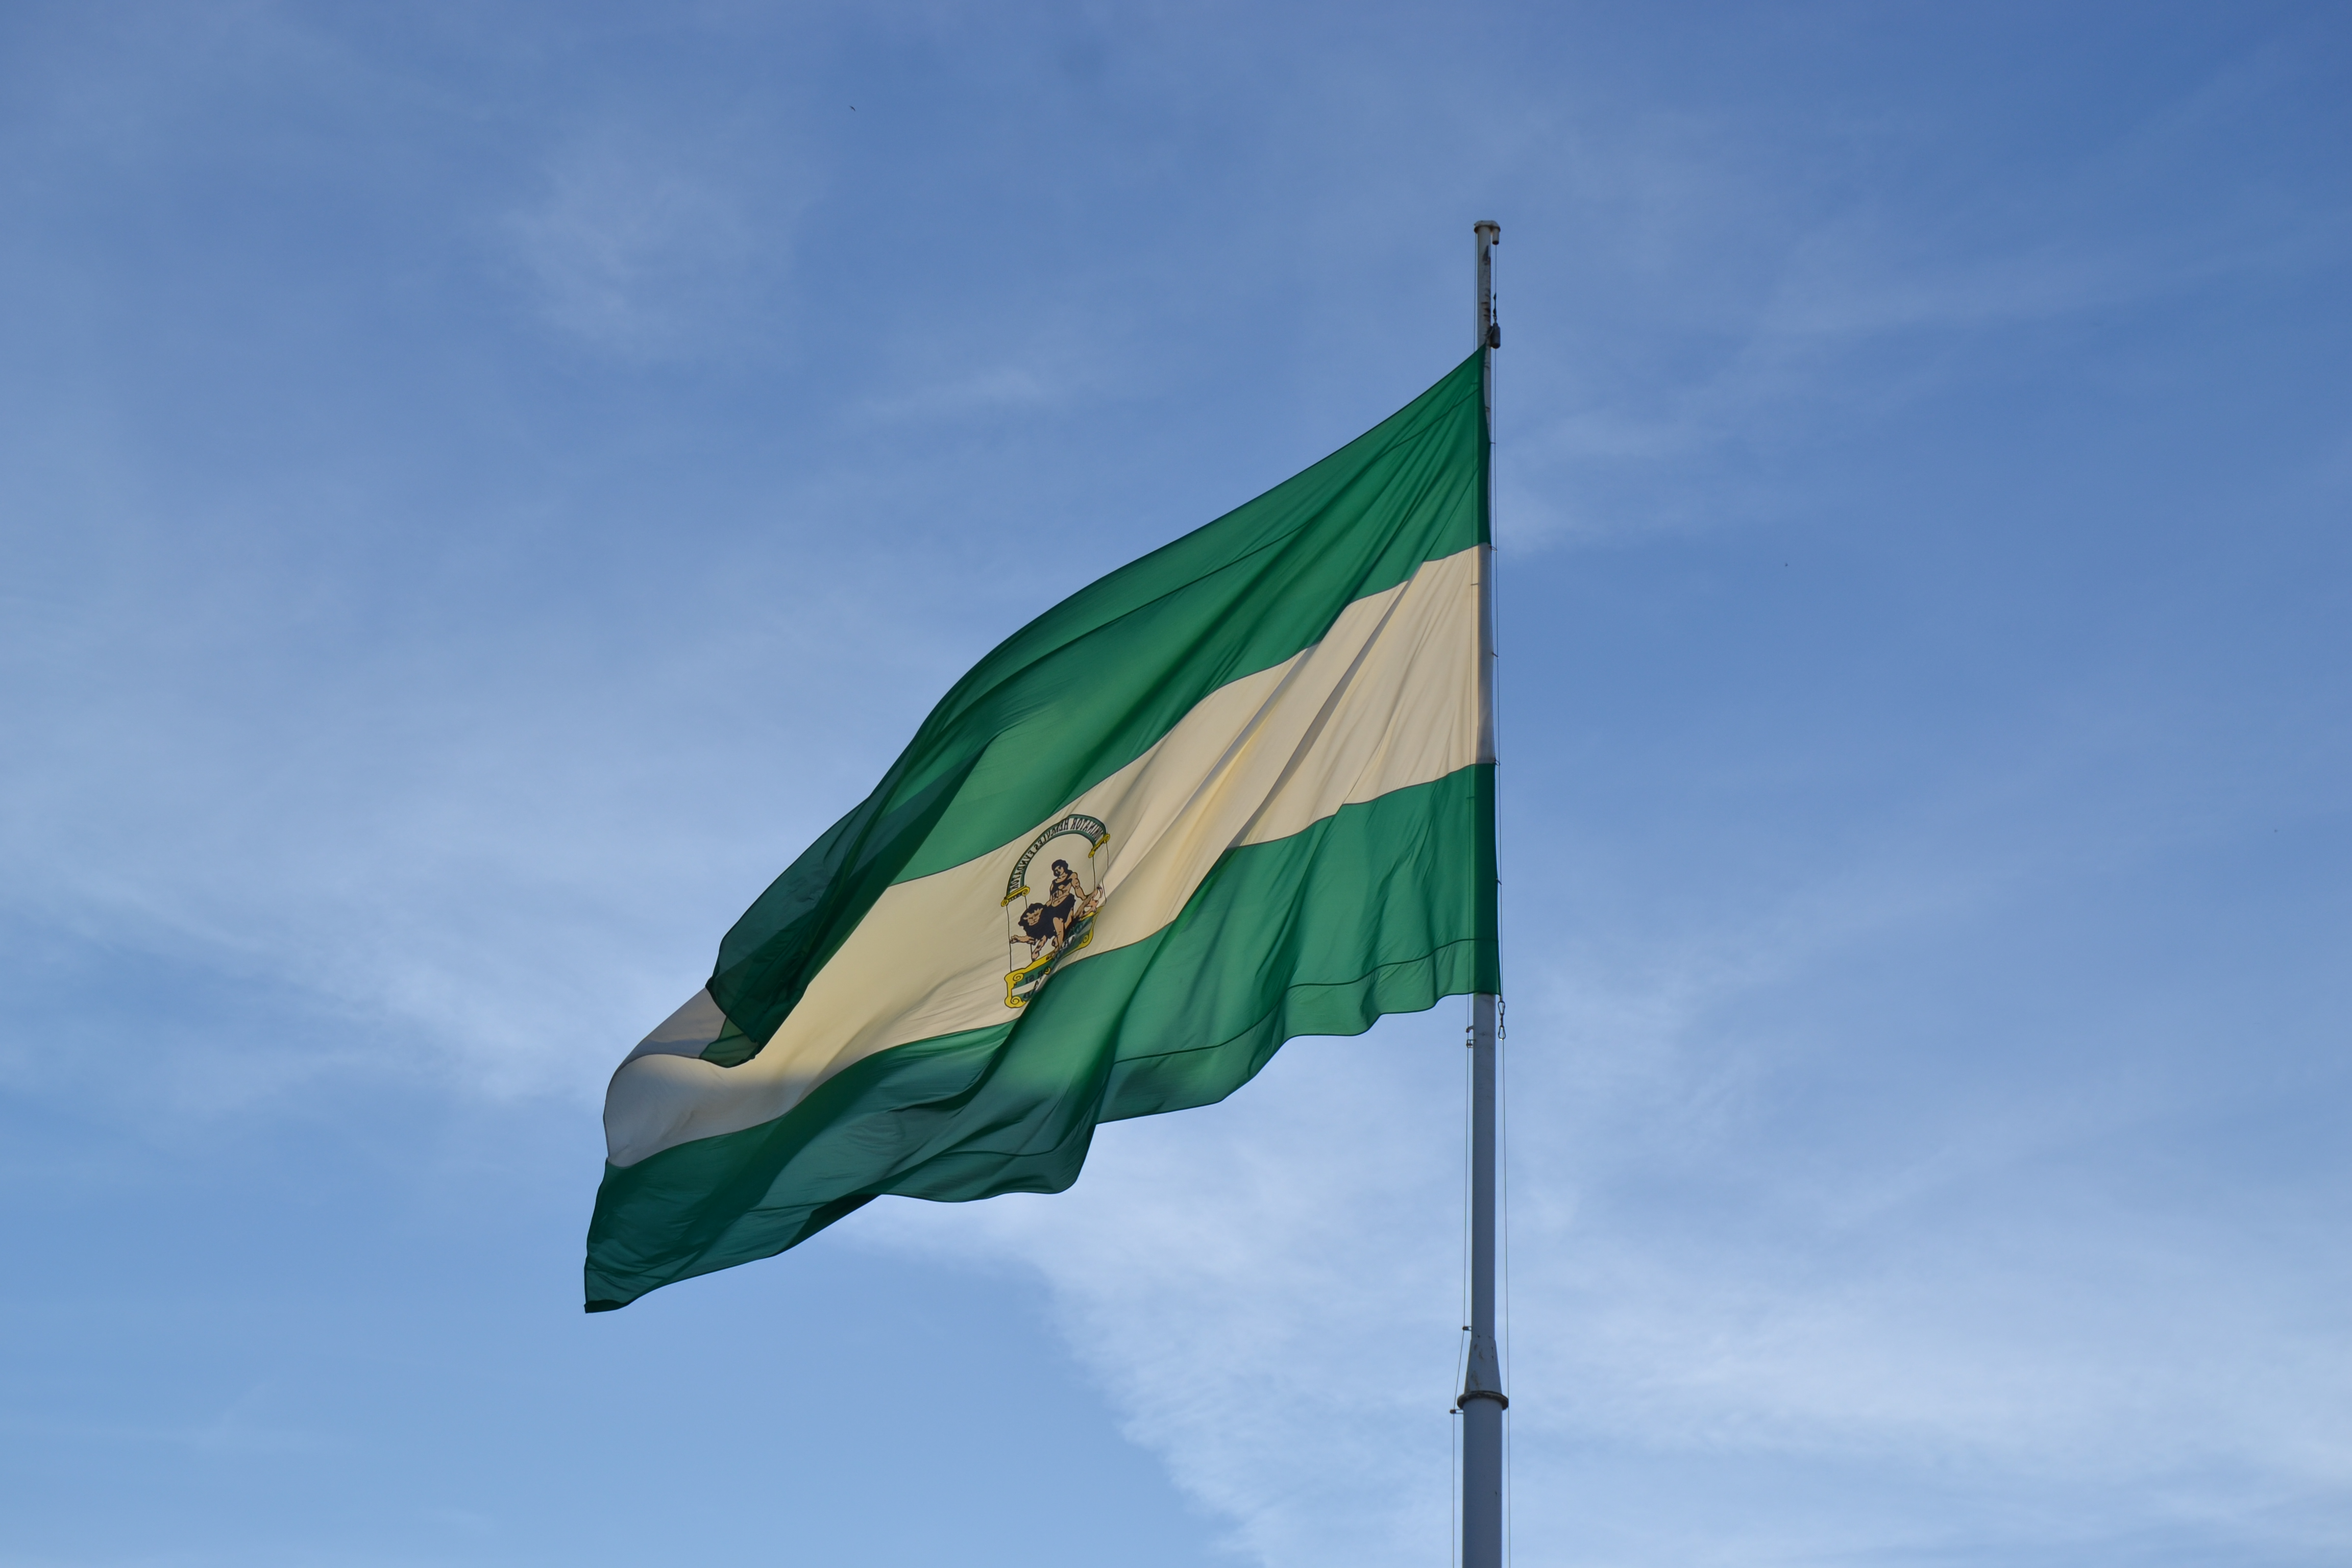 File:Bandera de Andalucía (32513961673).jpg - Wikimedia Commons